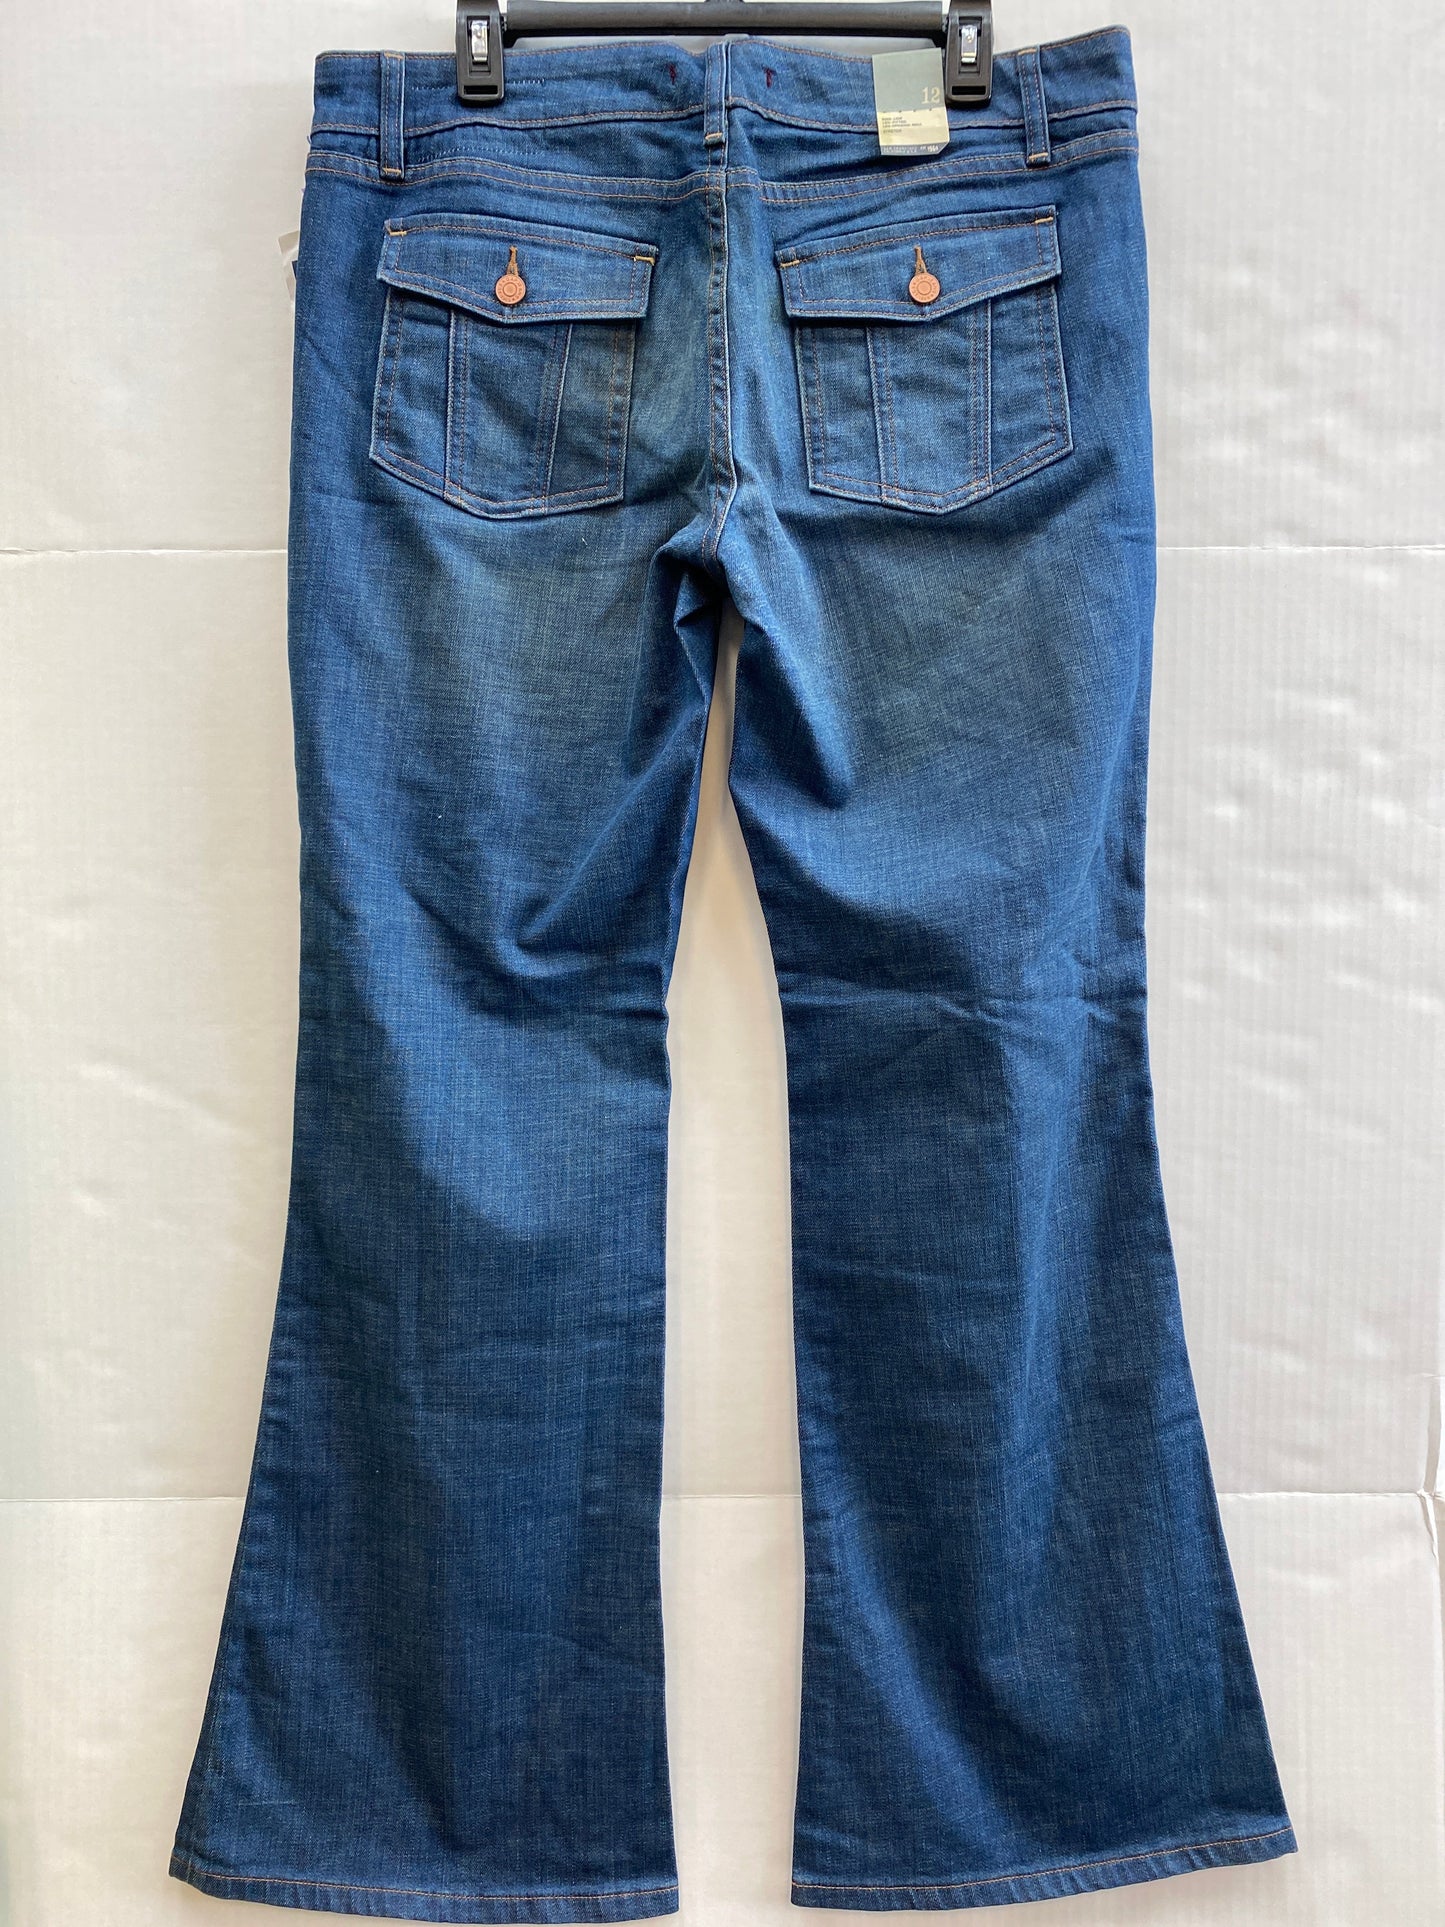 Blue Denim Jeans Boot Cut Gap, Size 12